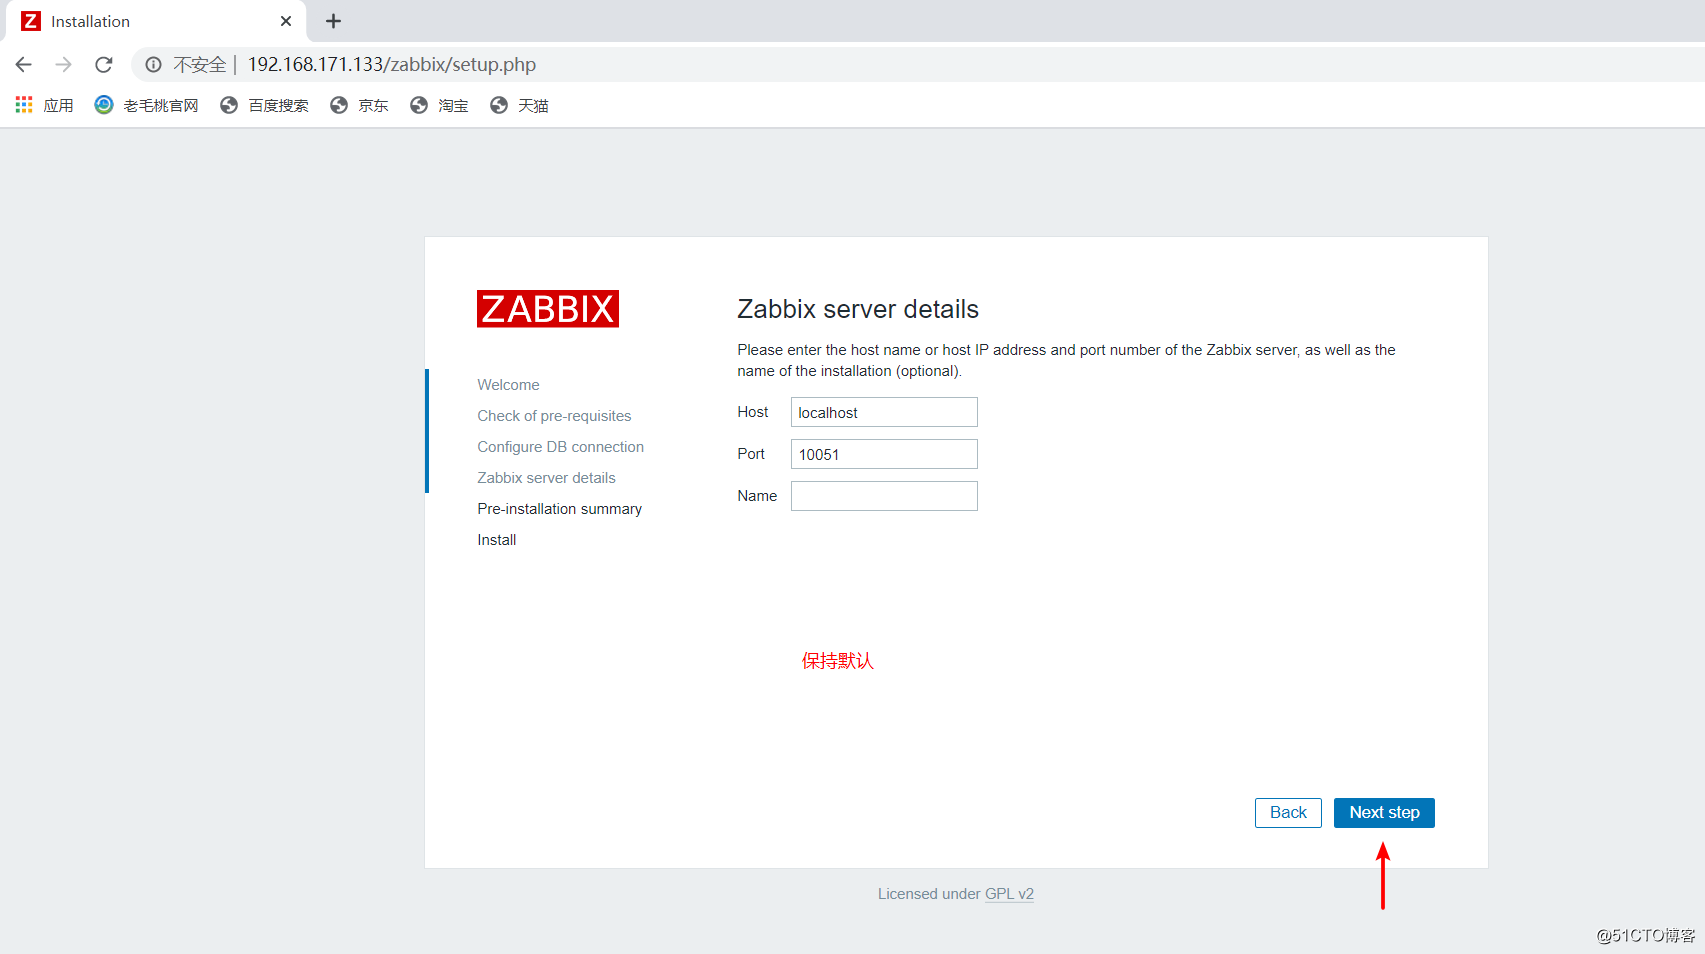 Monitoring Server deployment zabbix